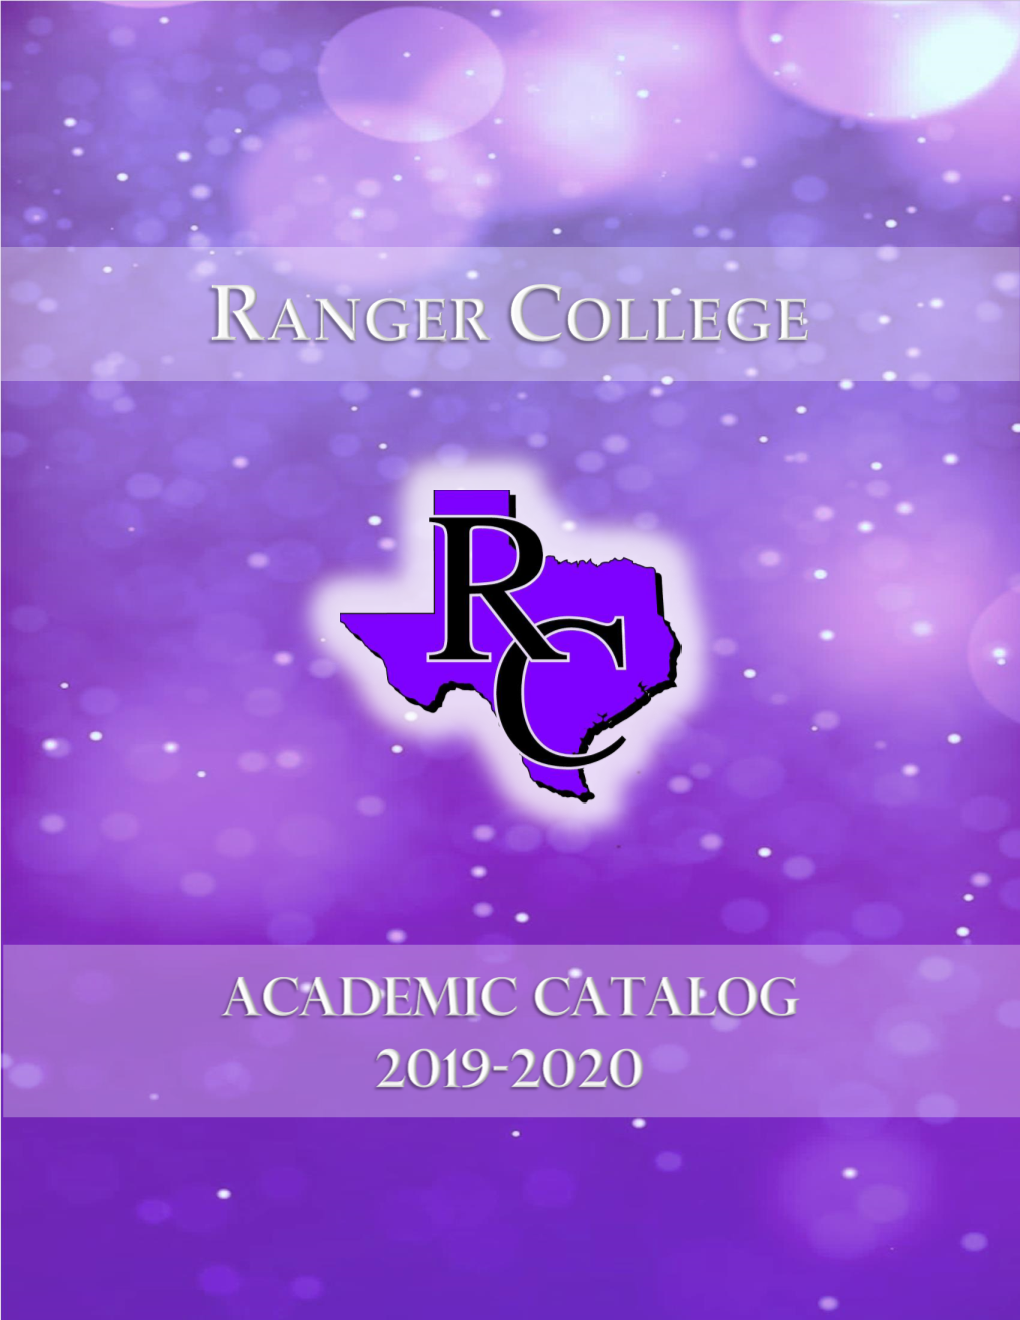 Ranger College Academic Catalog 2019-2020